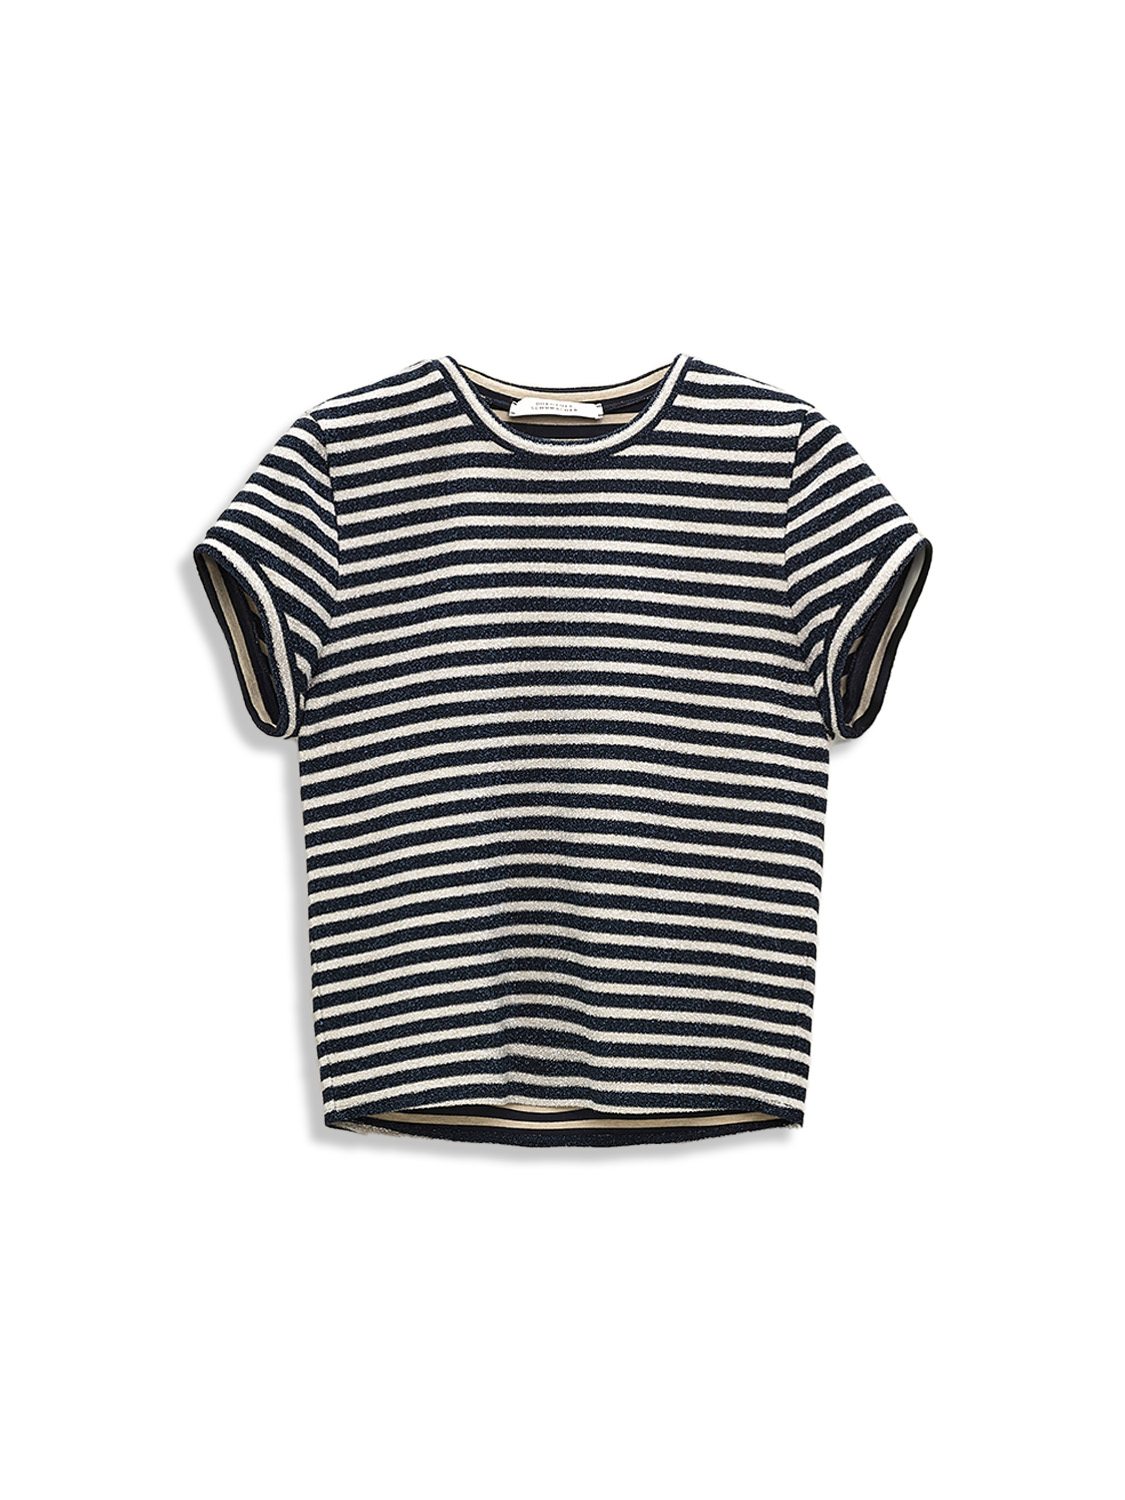 Endless shimmer shirt - Striped t-shirt with shimmer design 